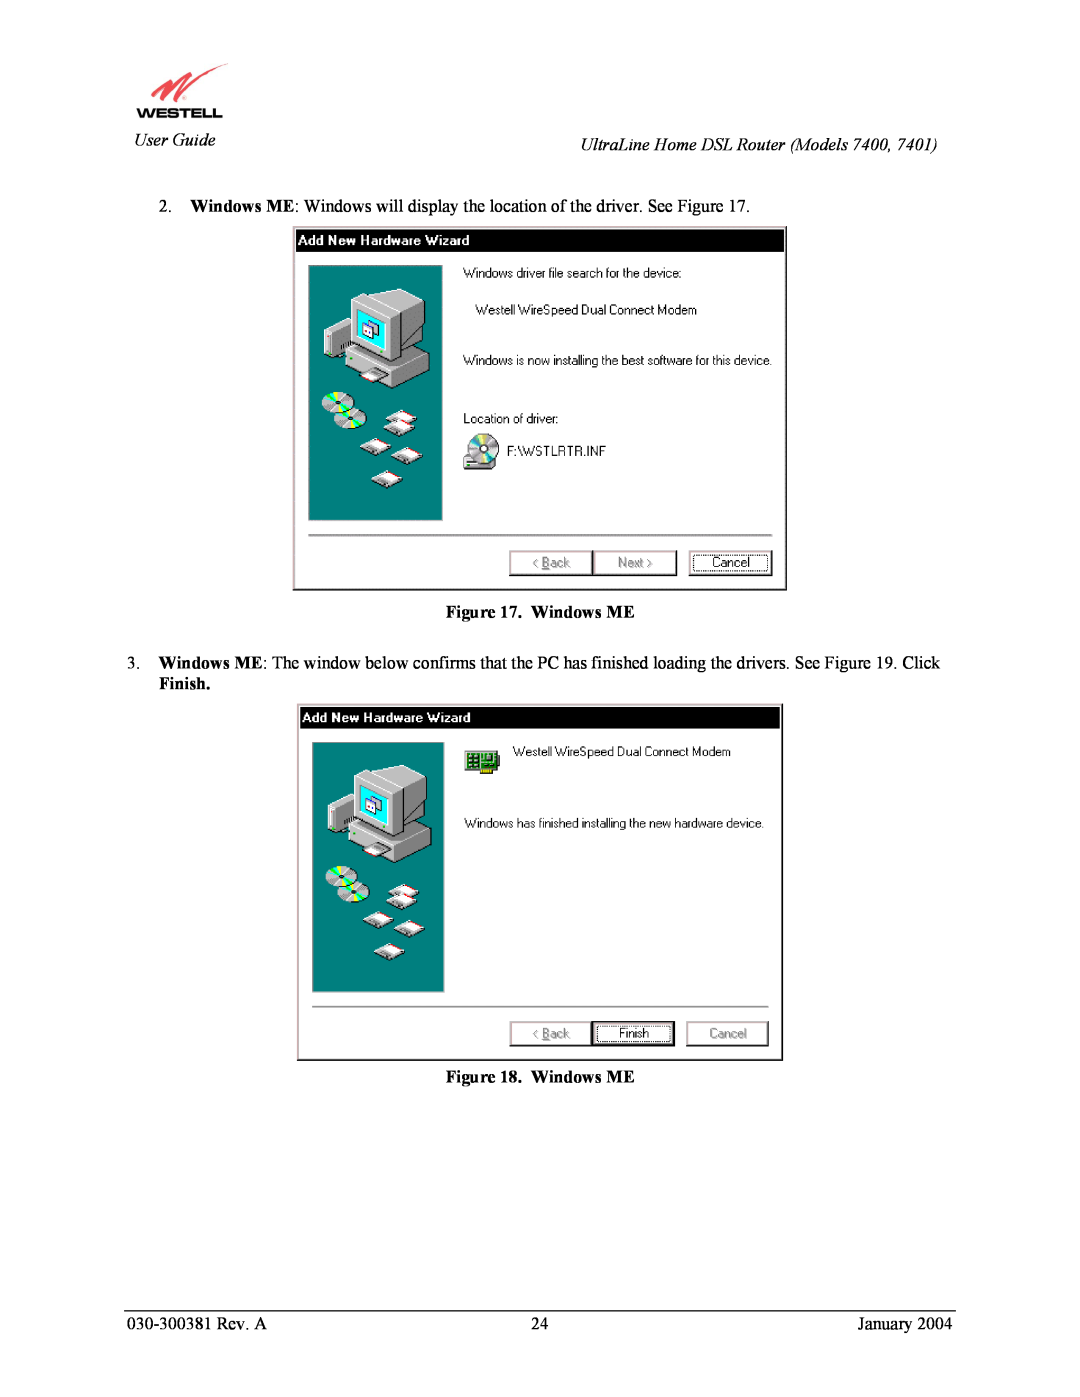 Westell Technologies 7401, 7400 manual Finish . Windows ME, 030-300381 Rev. A, January 